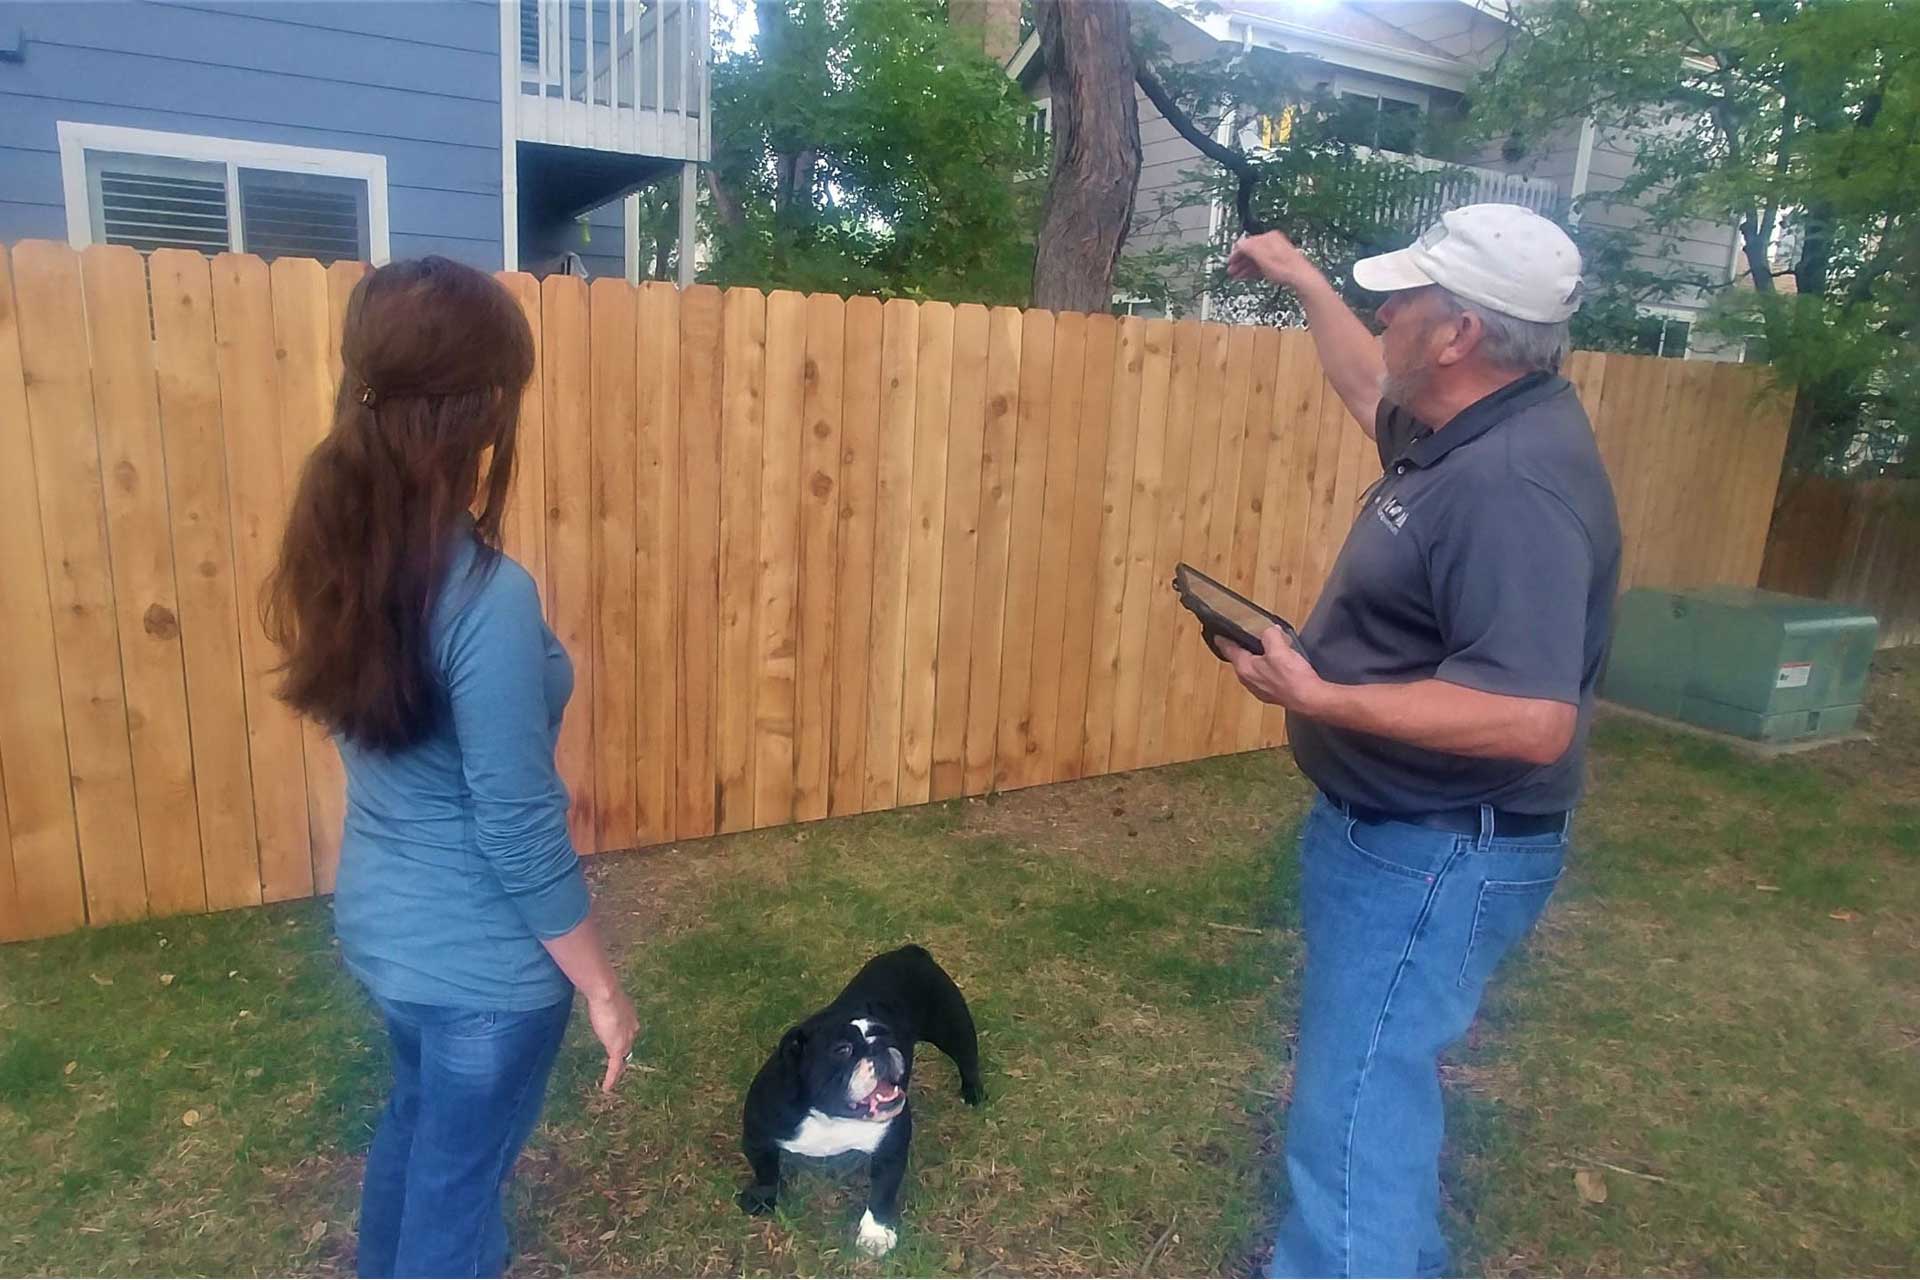 Mitigation specialist speaking with homeowner in yard